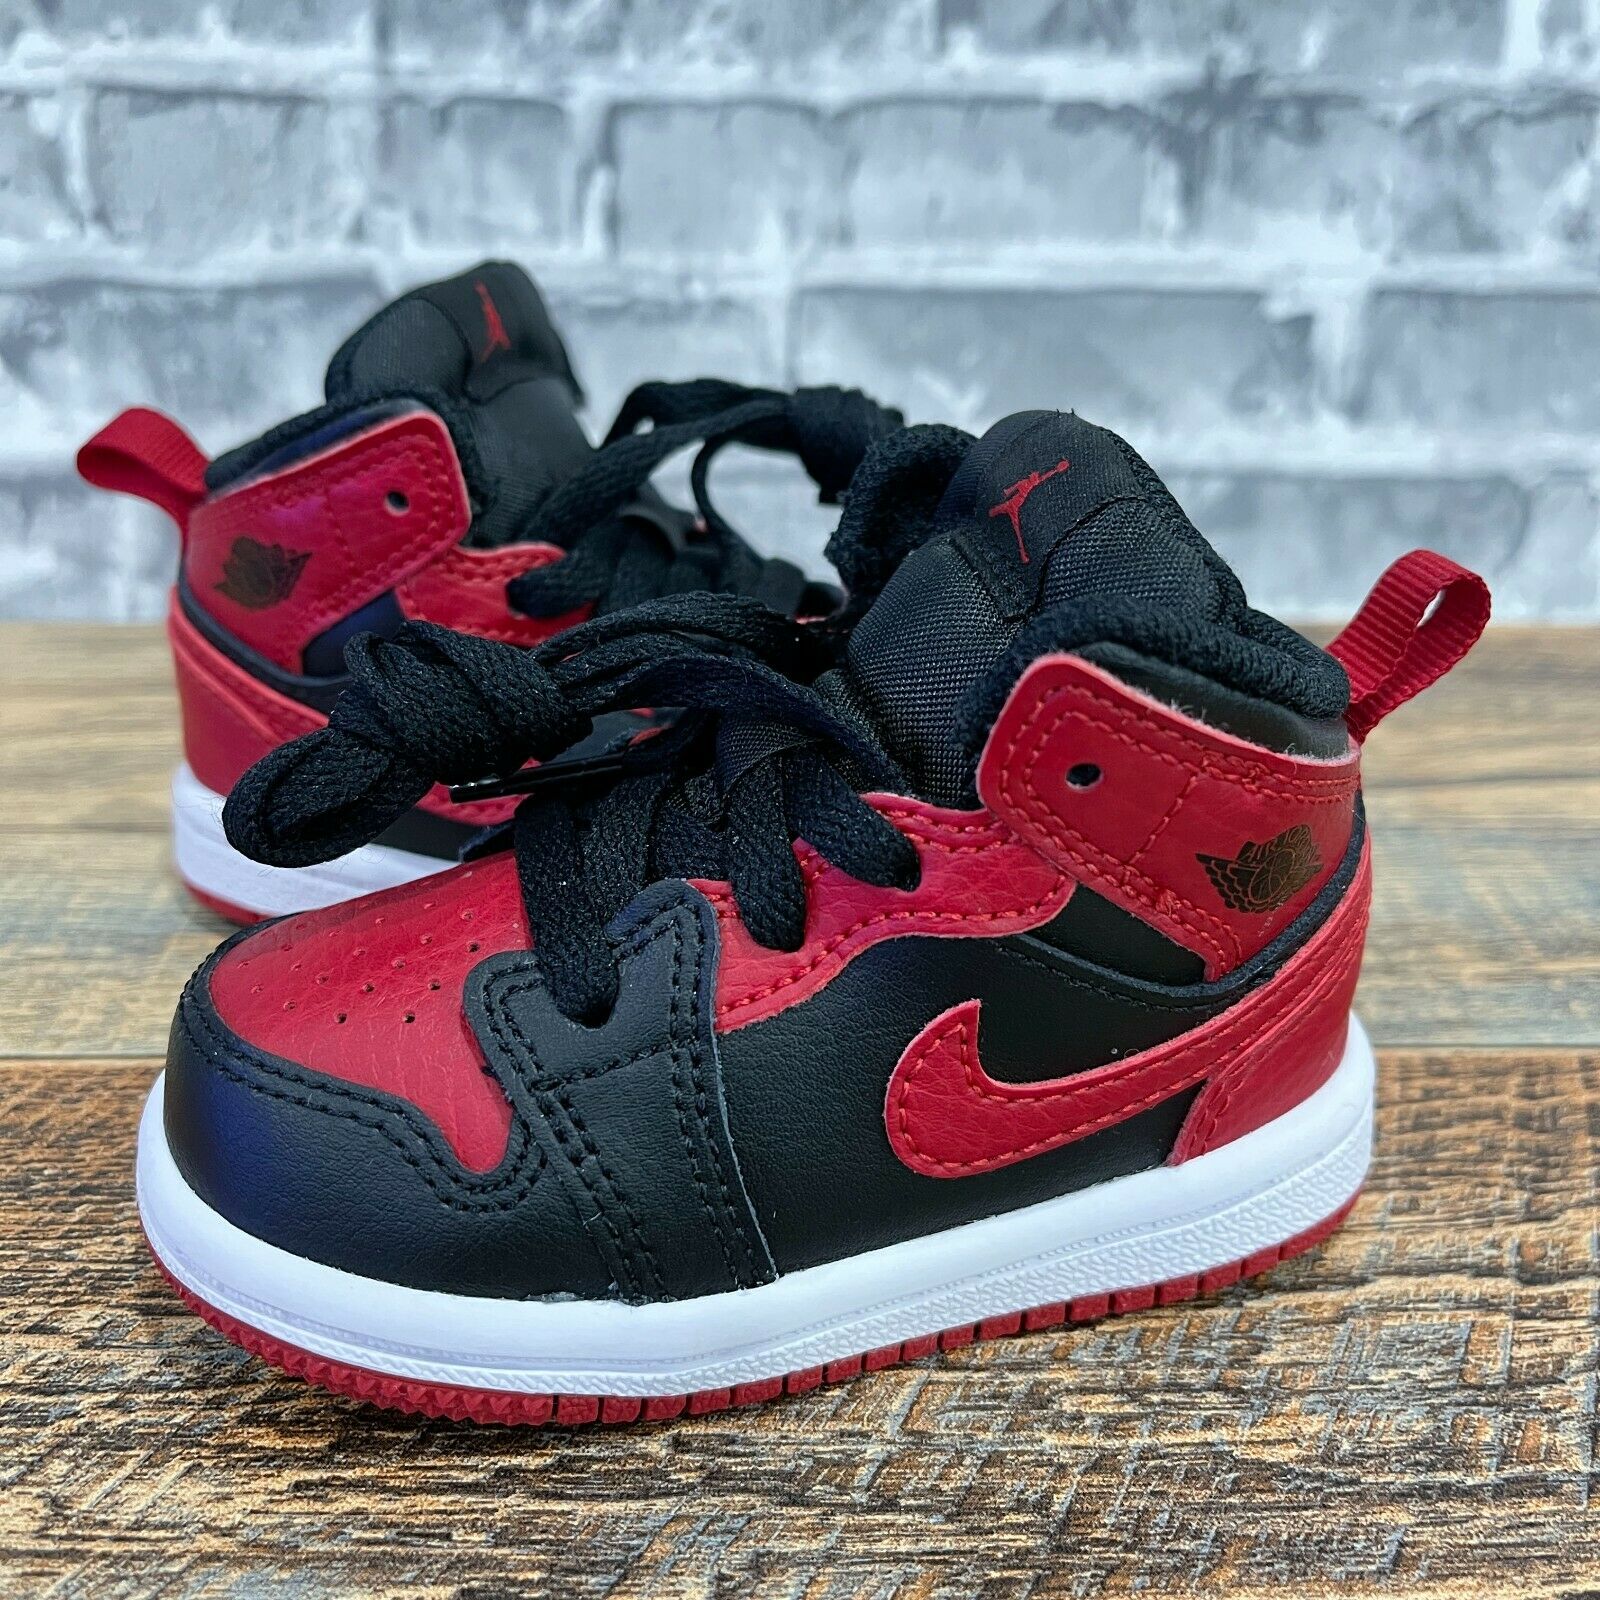 Nike Air Jordan 1 AJ1 Mid TD Banned Red Black 640735-074 Toddler Shoes Size 4C